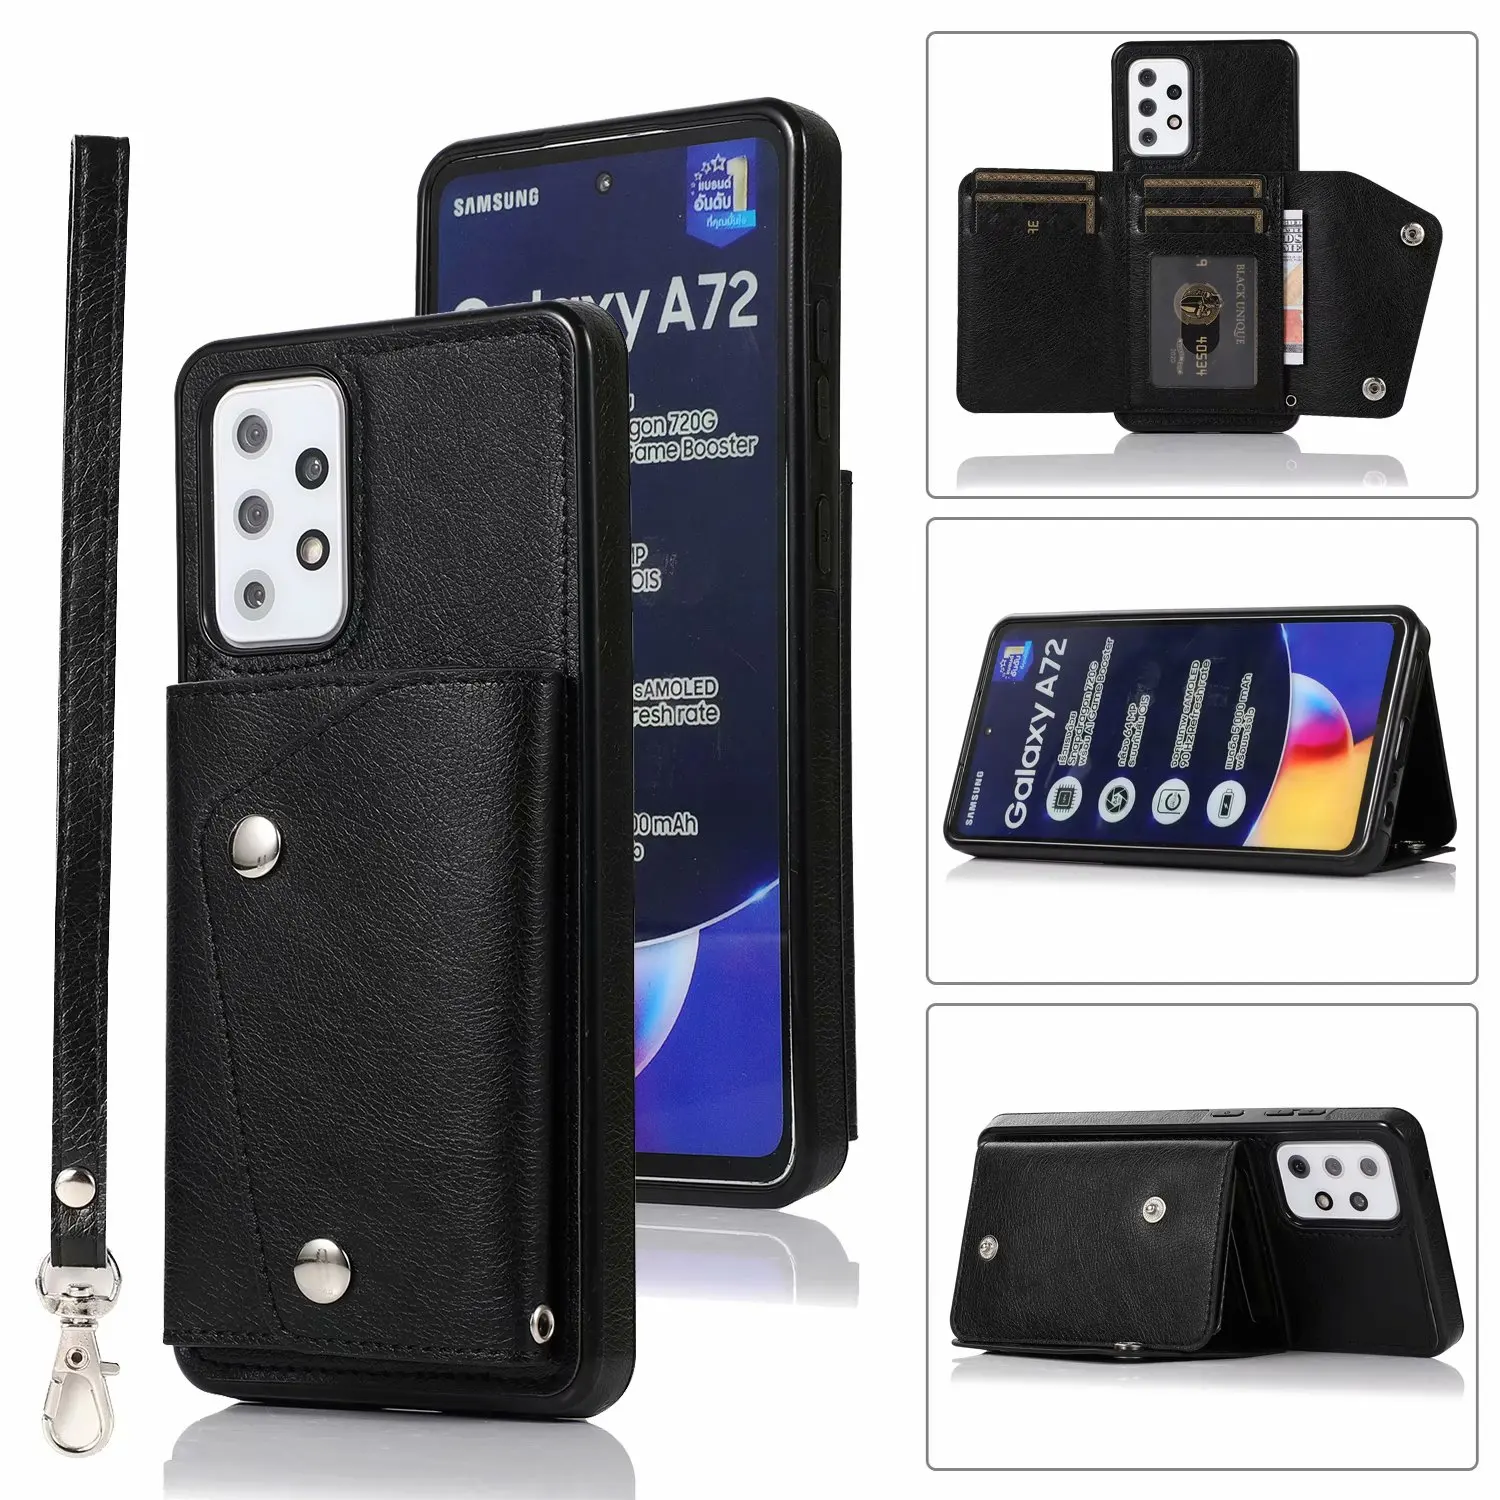 

Folio Wallet Case For Samsung A72 A52 A32 A71 A51 A50 A70 A81 A90 A91 Detachable Wrist Strp Premium PU Leather Cover Card Holder